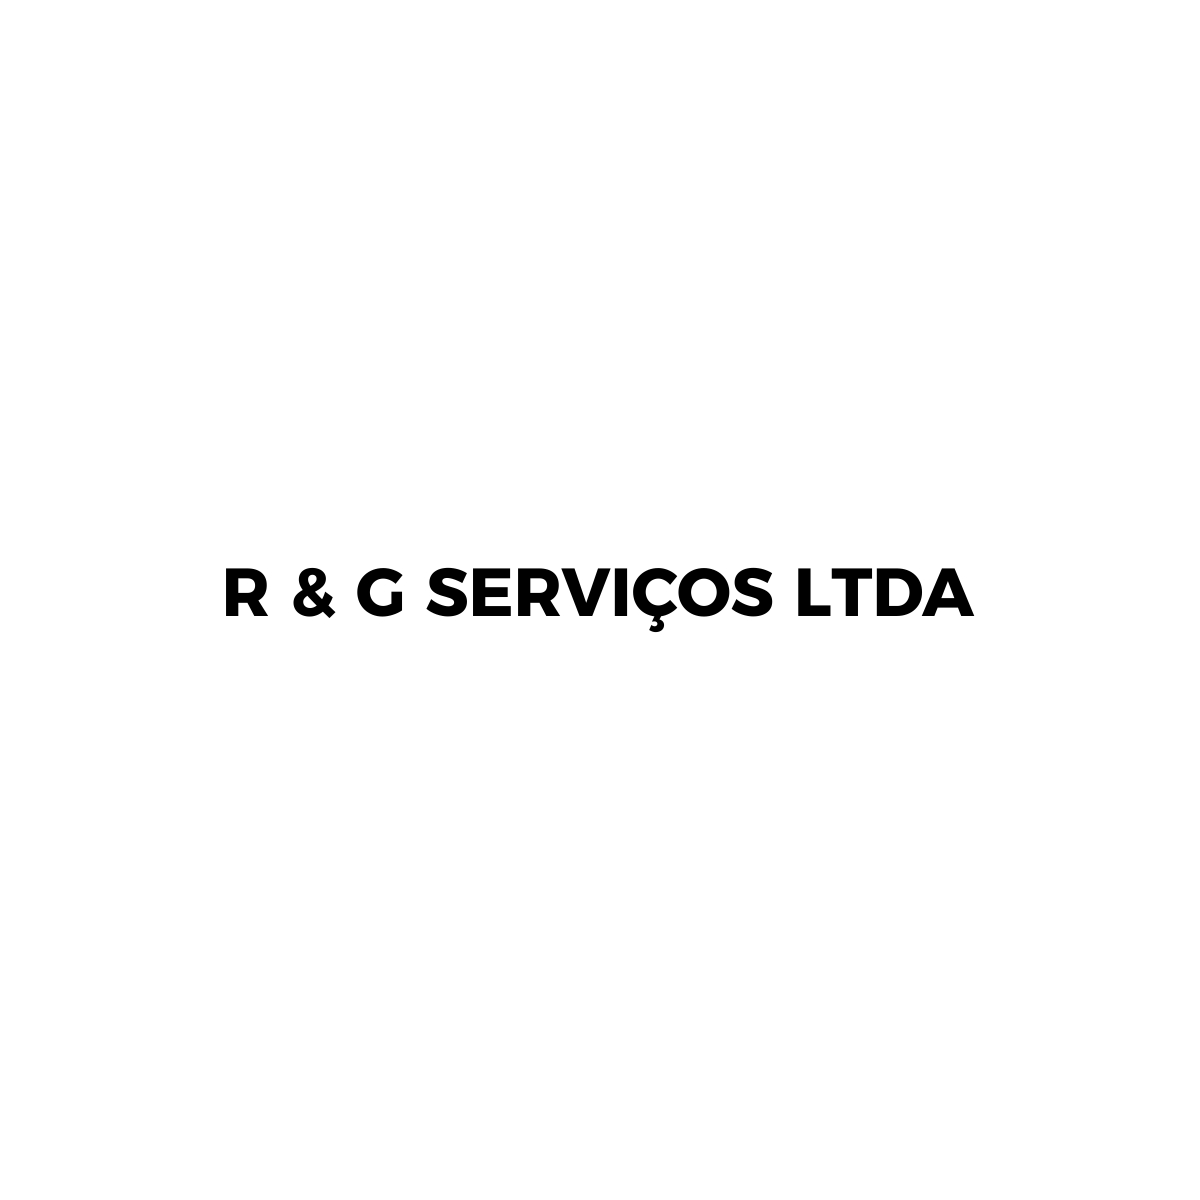 R & G Serviços LTDA